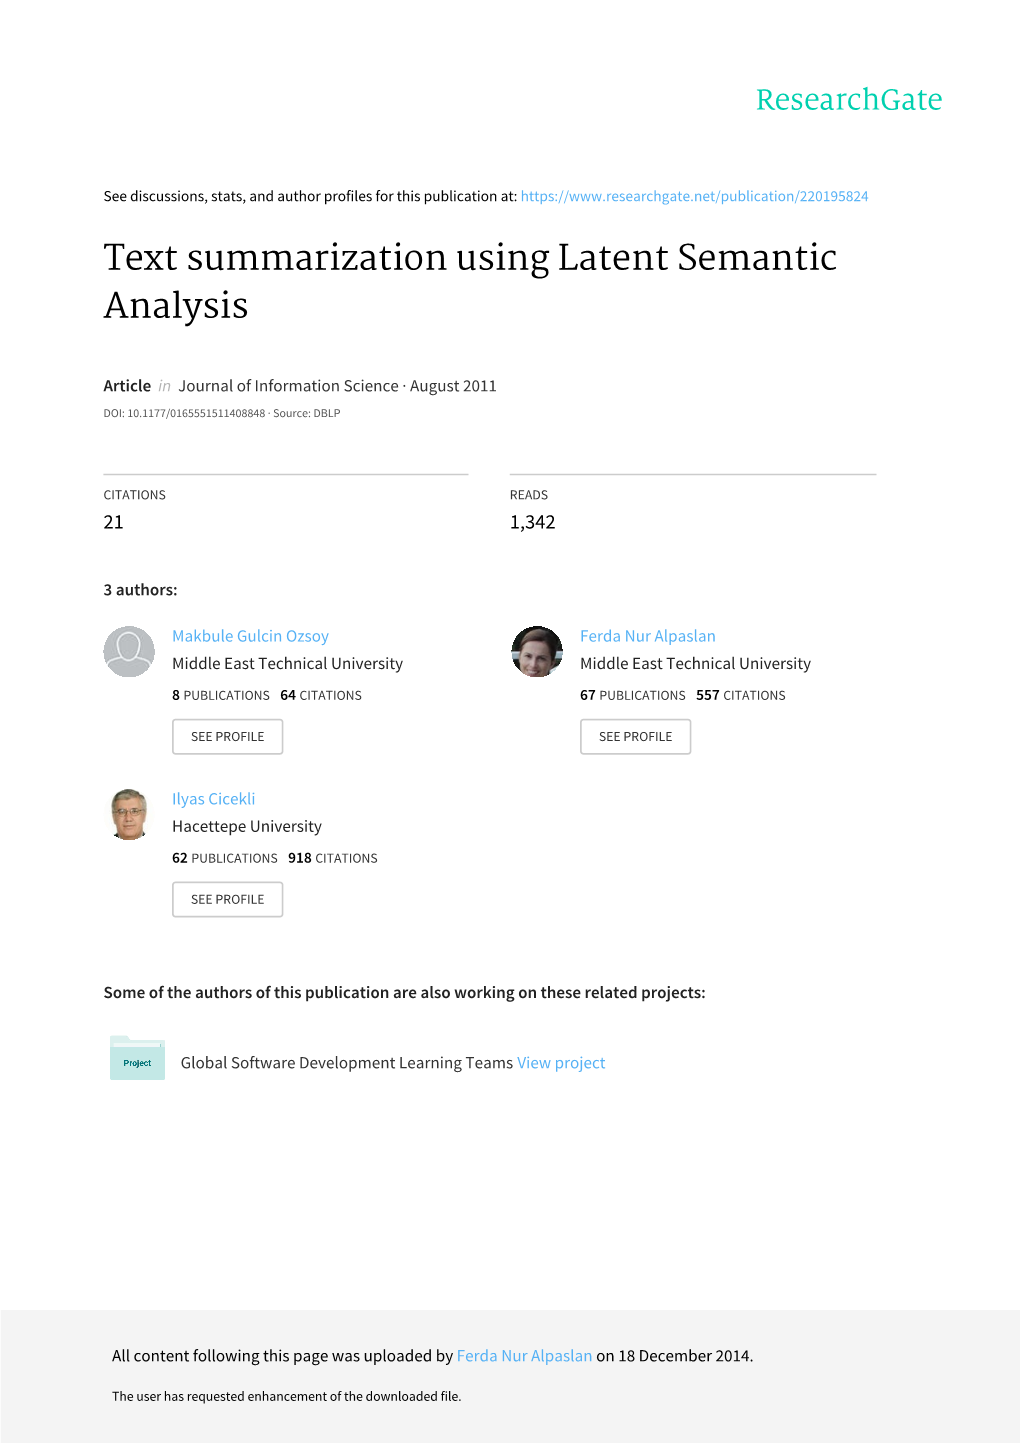 Text Summarization Using Latent Semantic Analysis